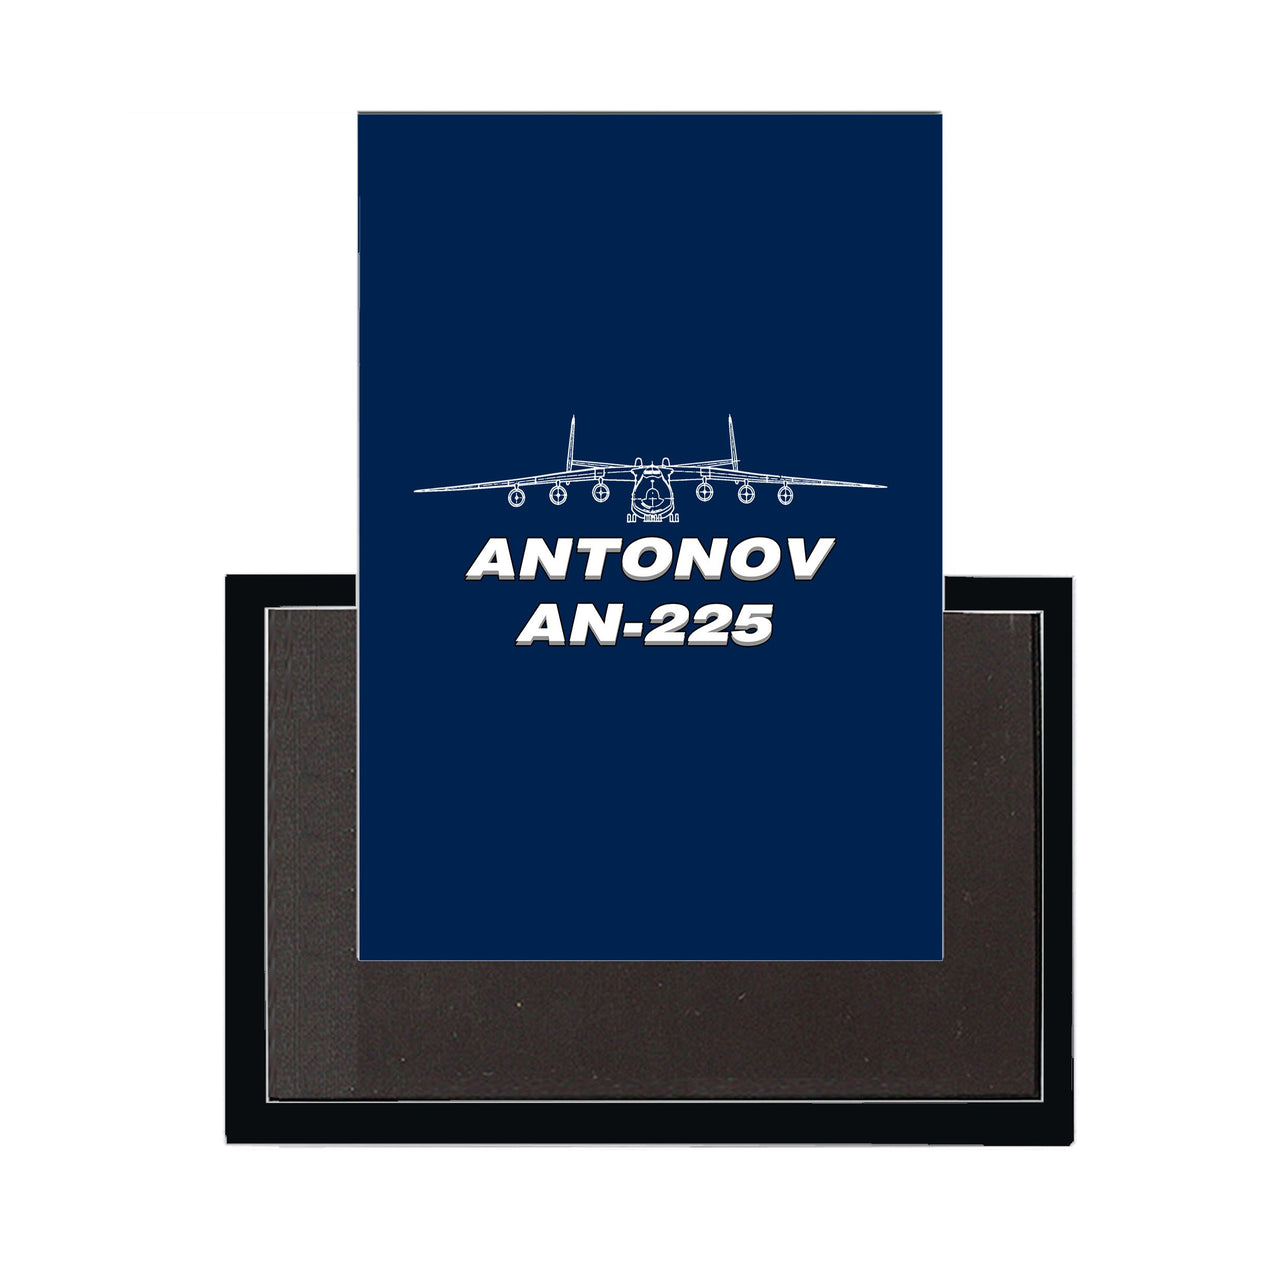 Antonov AN-225 (26) Designed Magnets